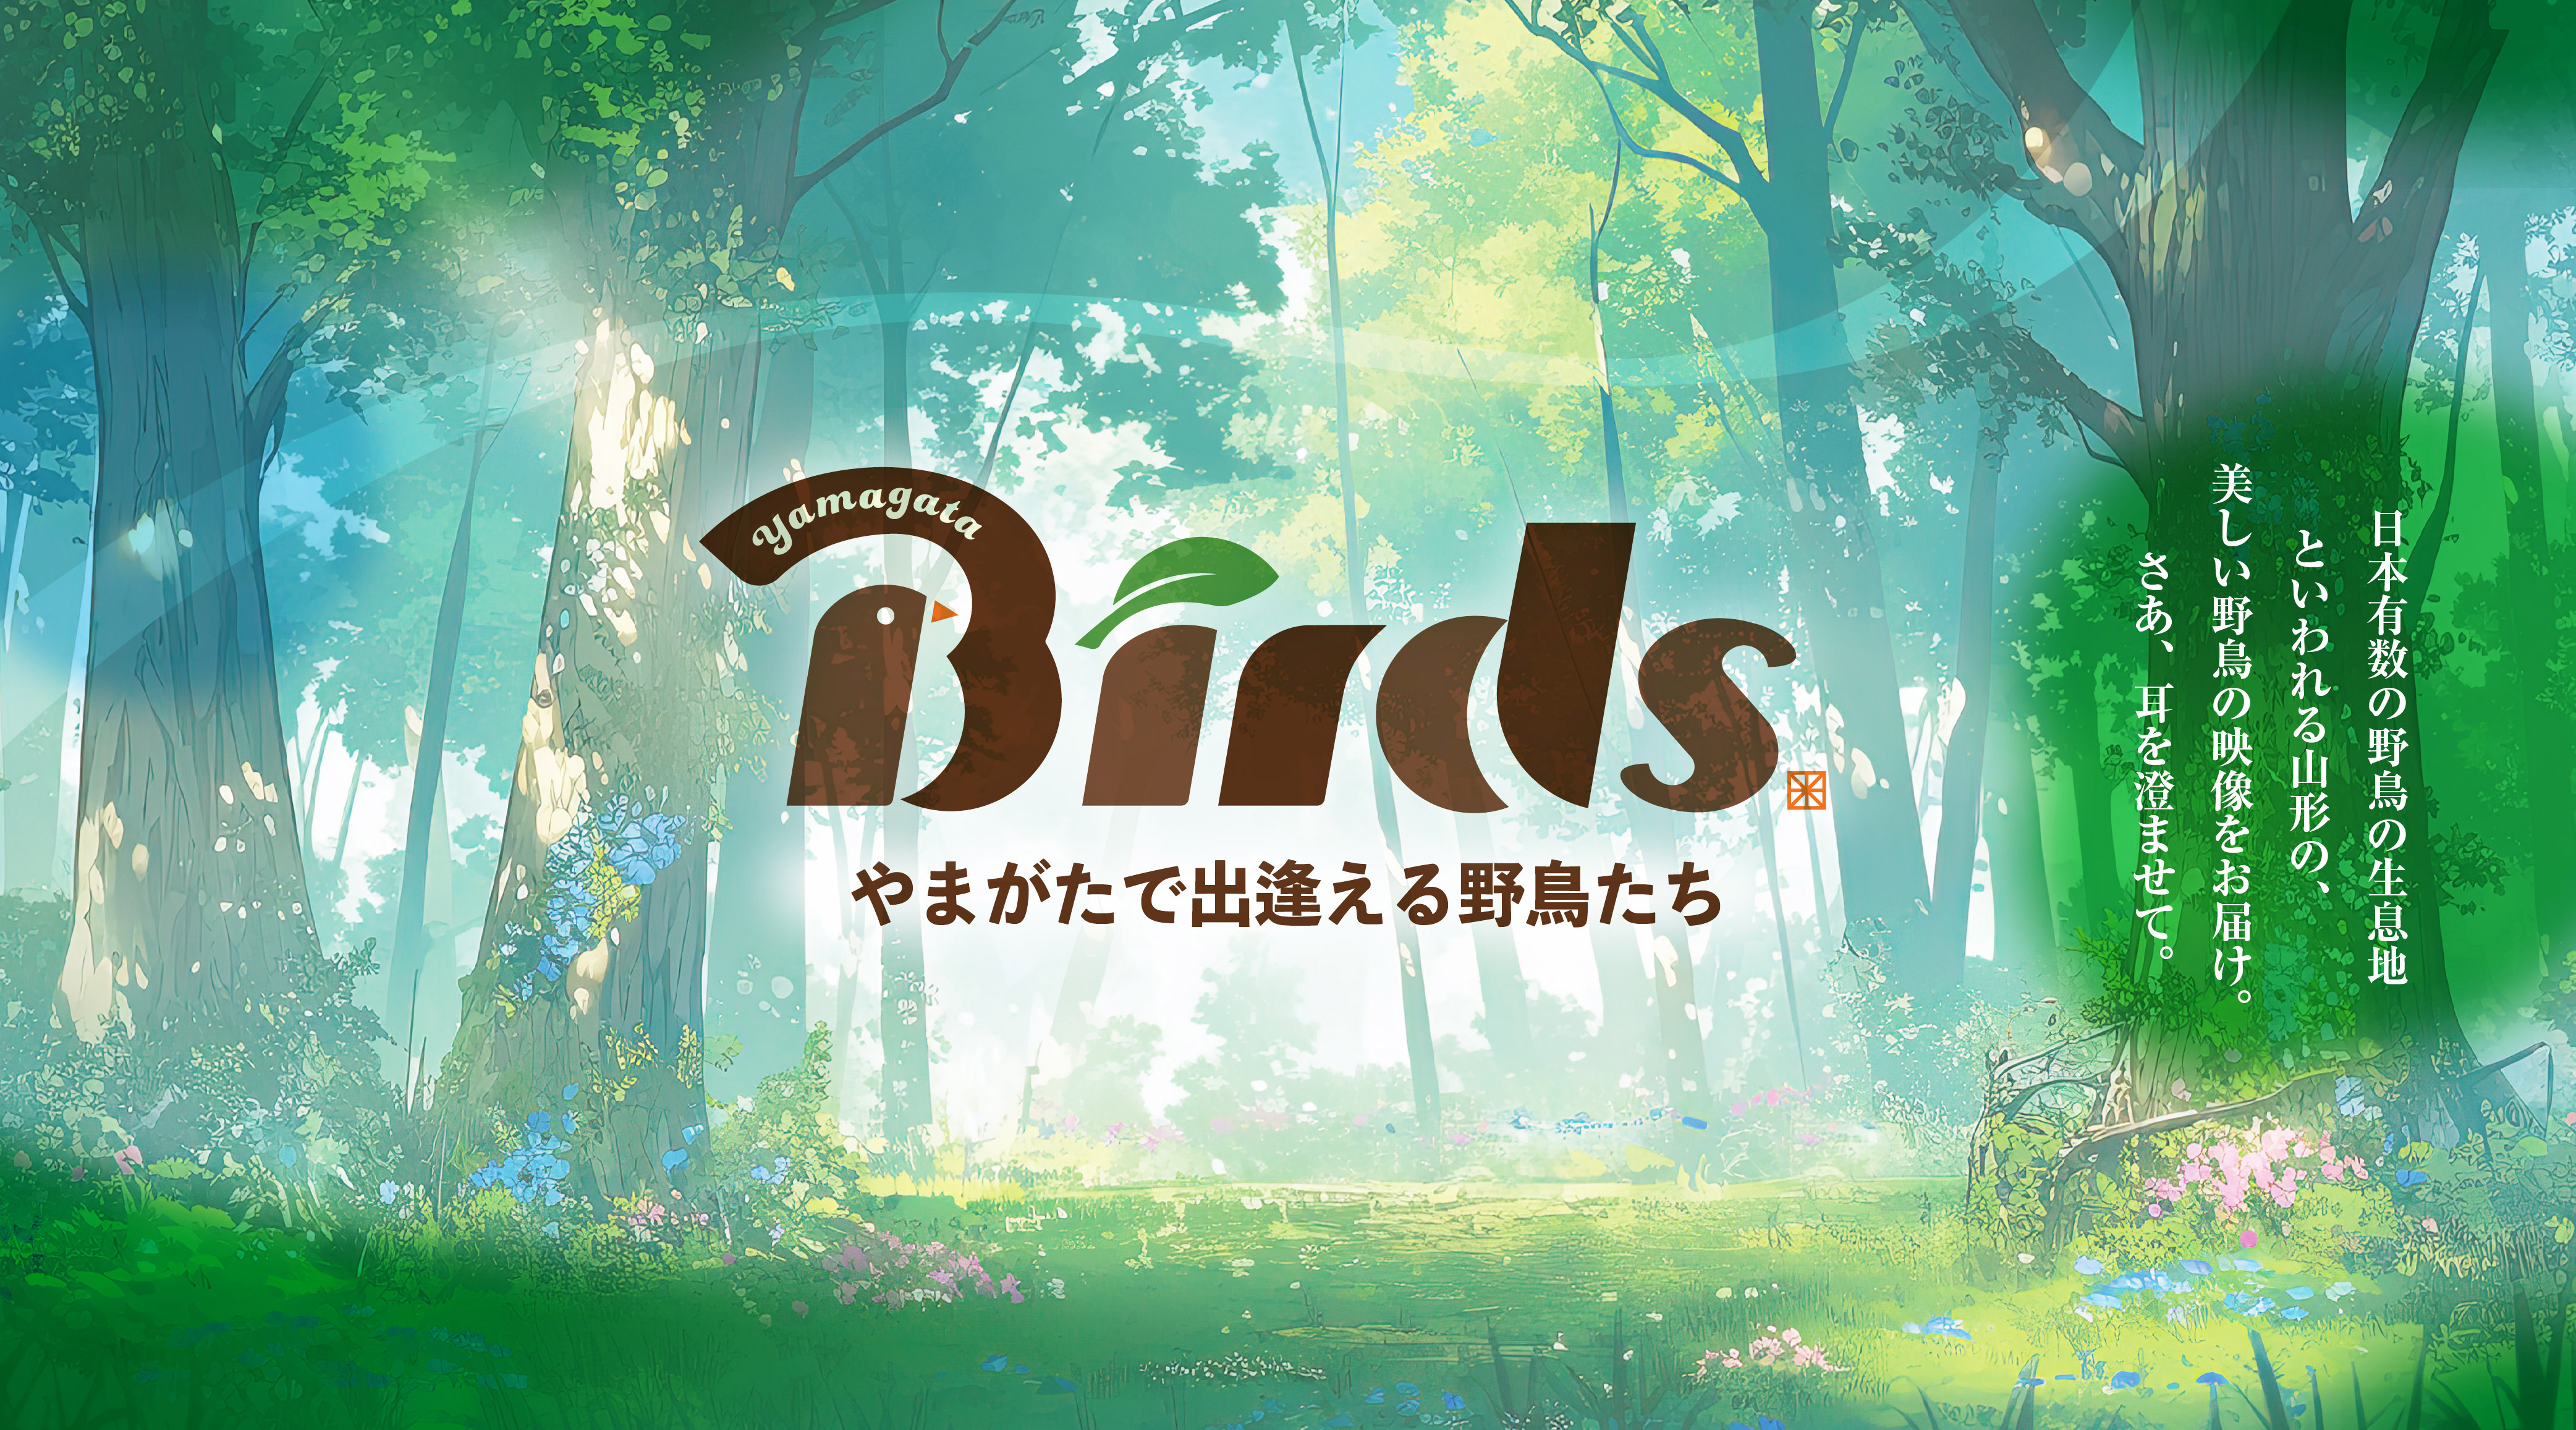 webメディア山形会議の新コンテンツ「yamagata birds」公開